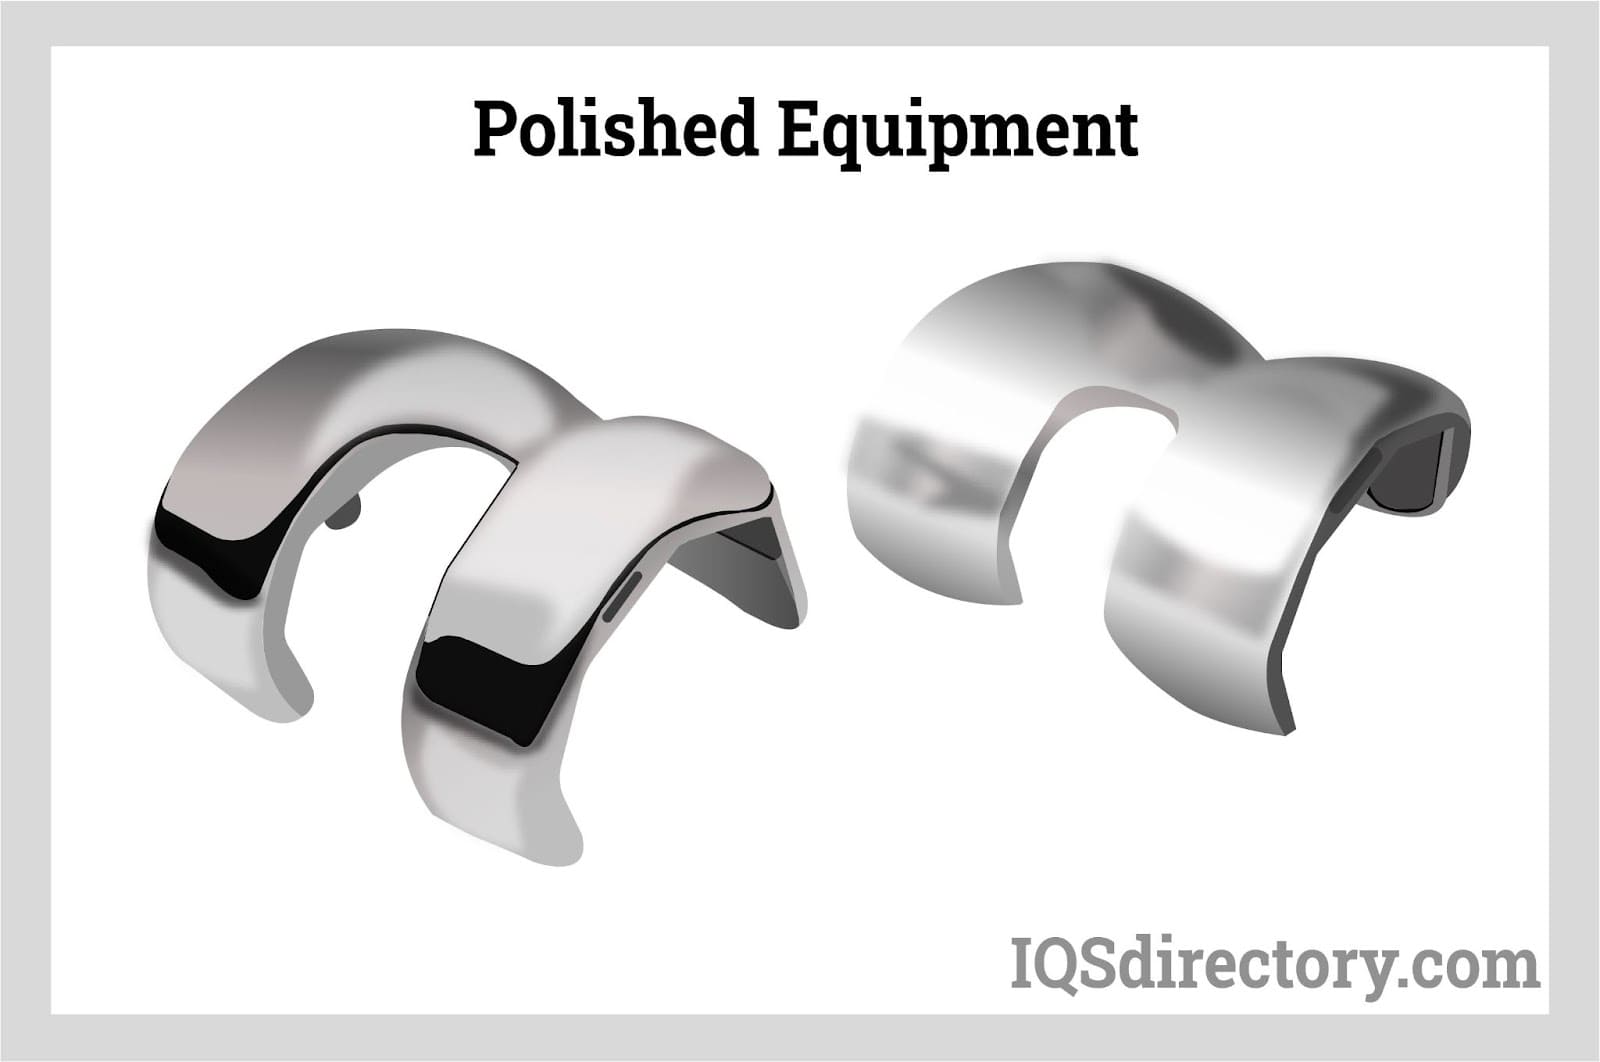 https://www.iqsdirectory.com/articles/deburring-equipment/finishing-and-polishing-machines/polished-equipment.jpg